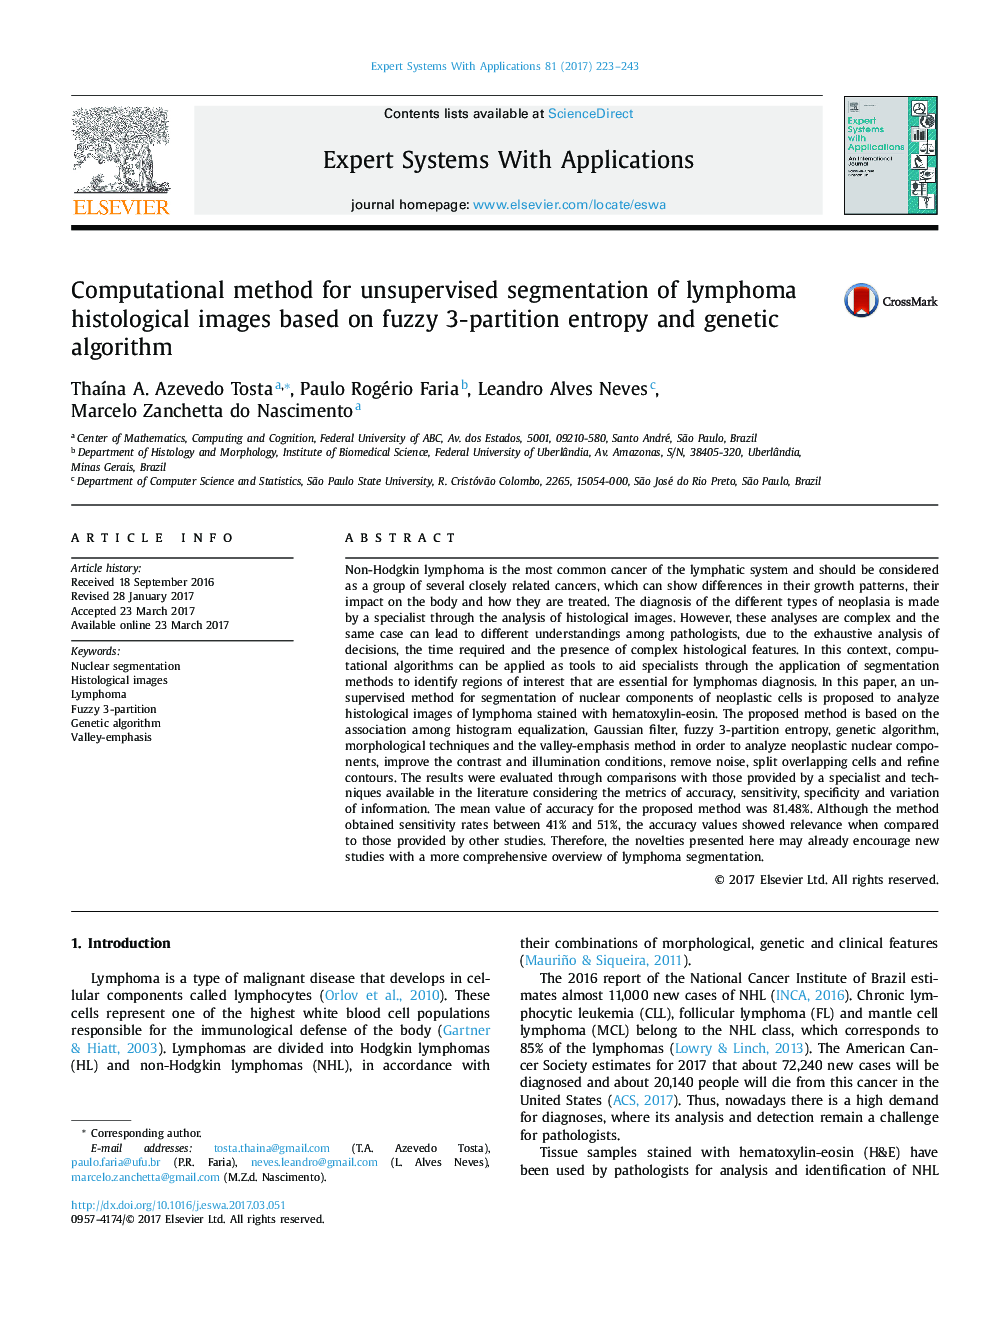 Computational method for unsupervised segmentation of lymphoma histological images based on fuzzy 3-partition entropy and genetic algorithm